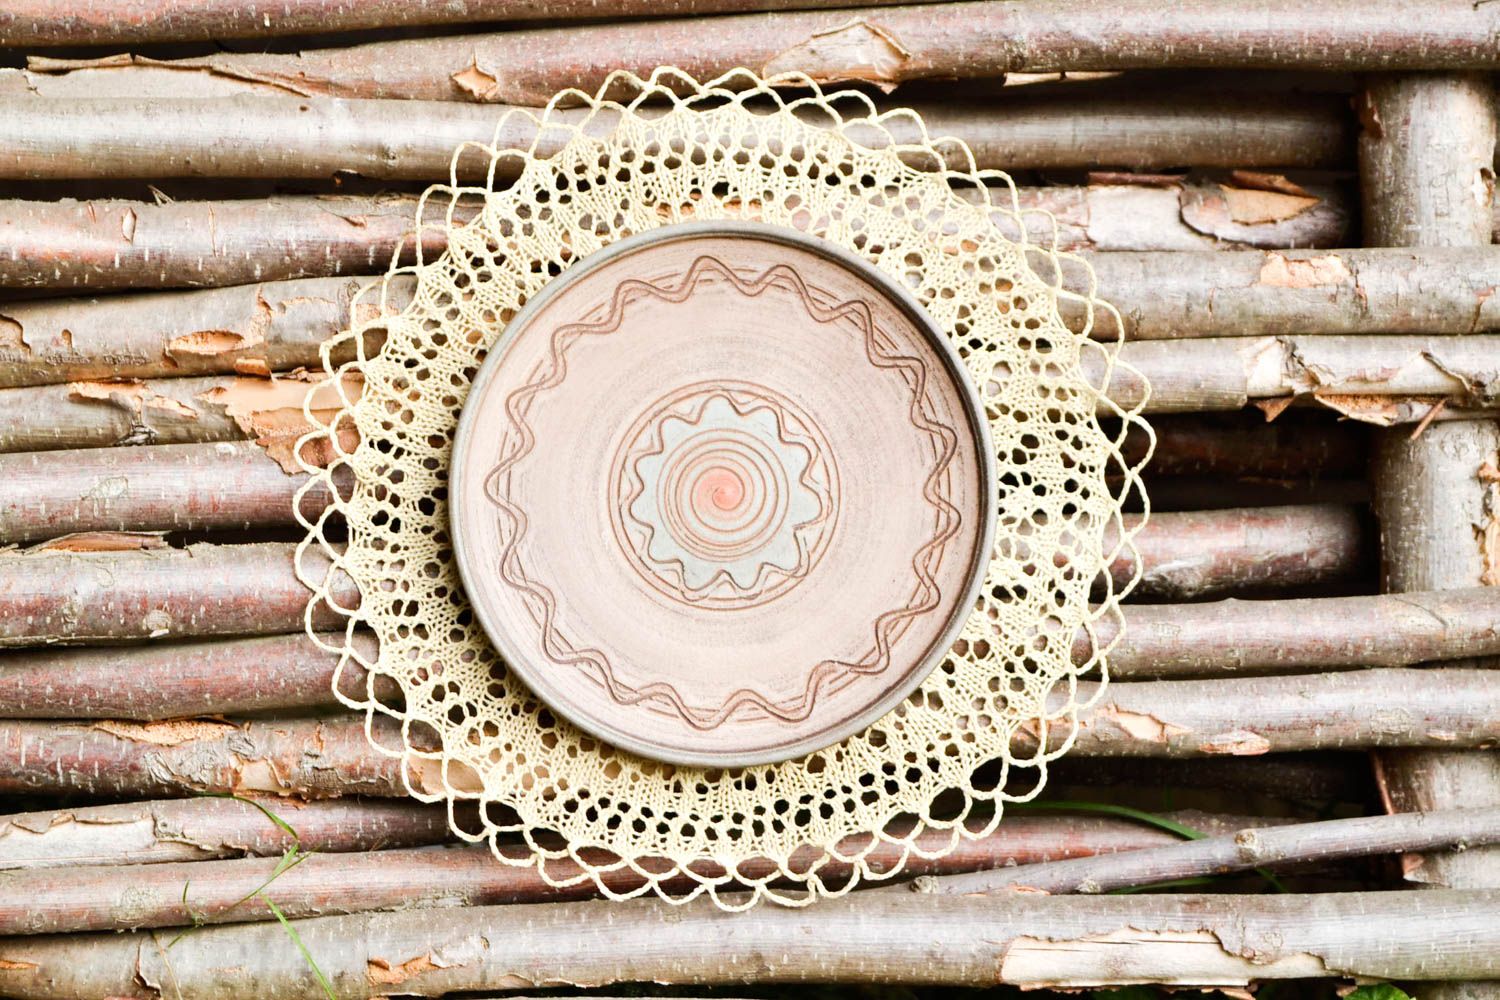 Handmade ceramic plate ceramic dish kitchen plates souvenir ideas kitchen decor photo 1